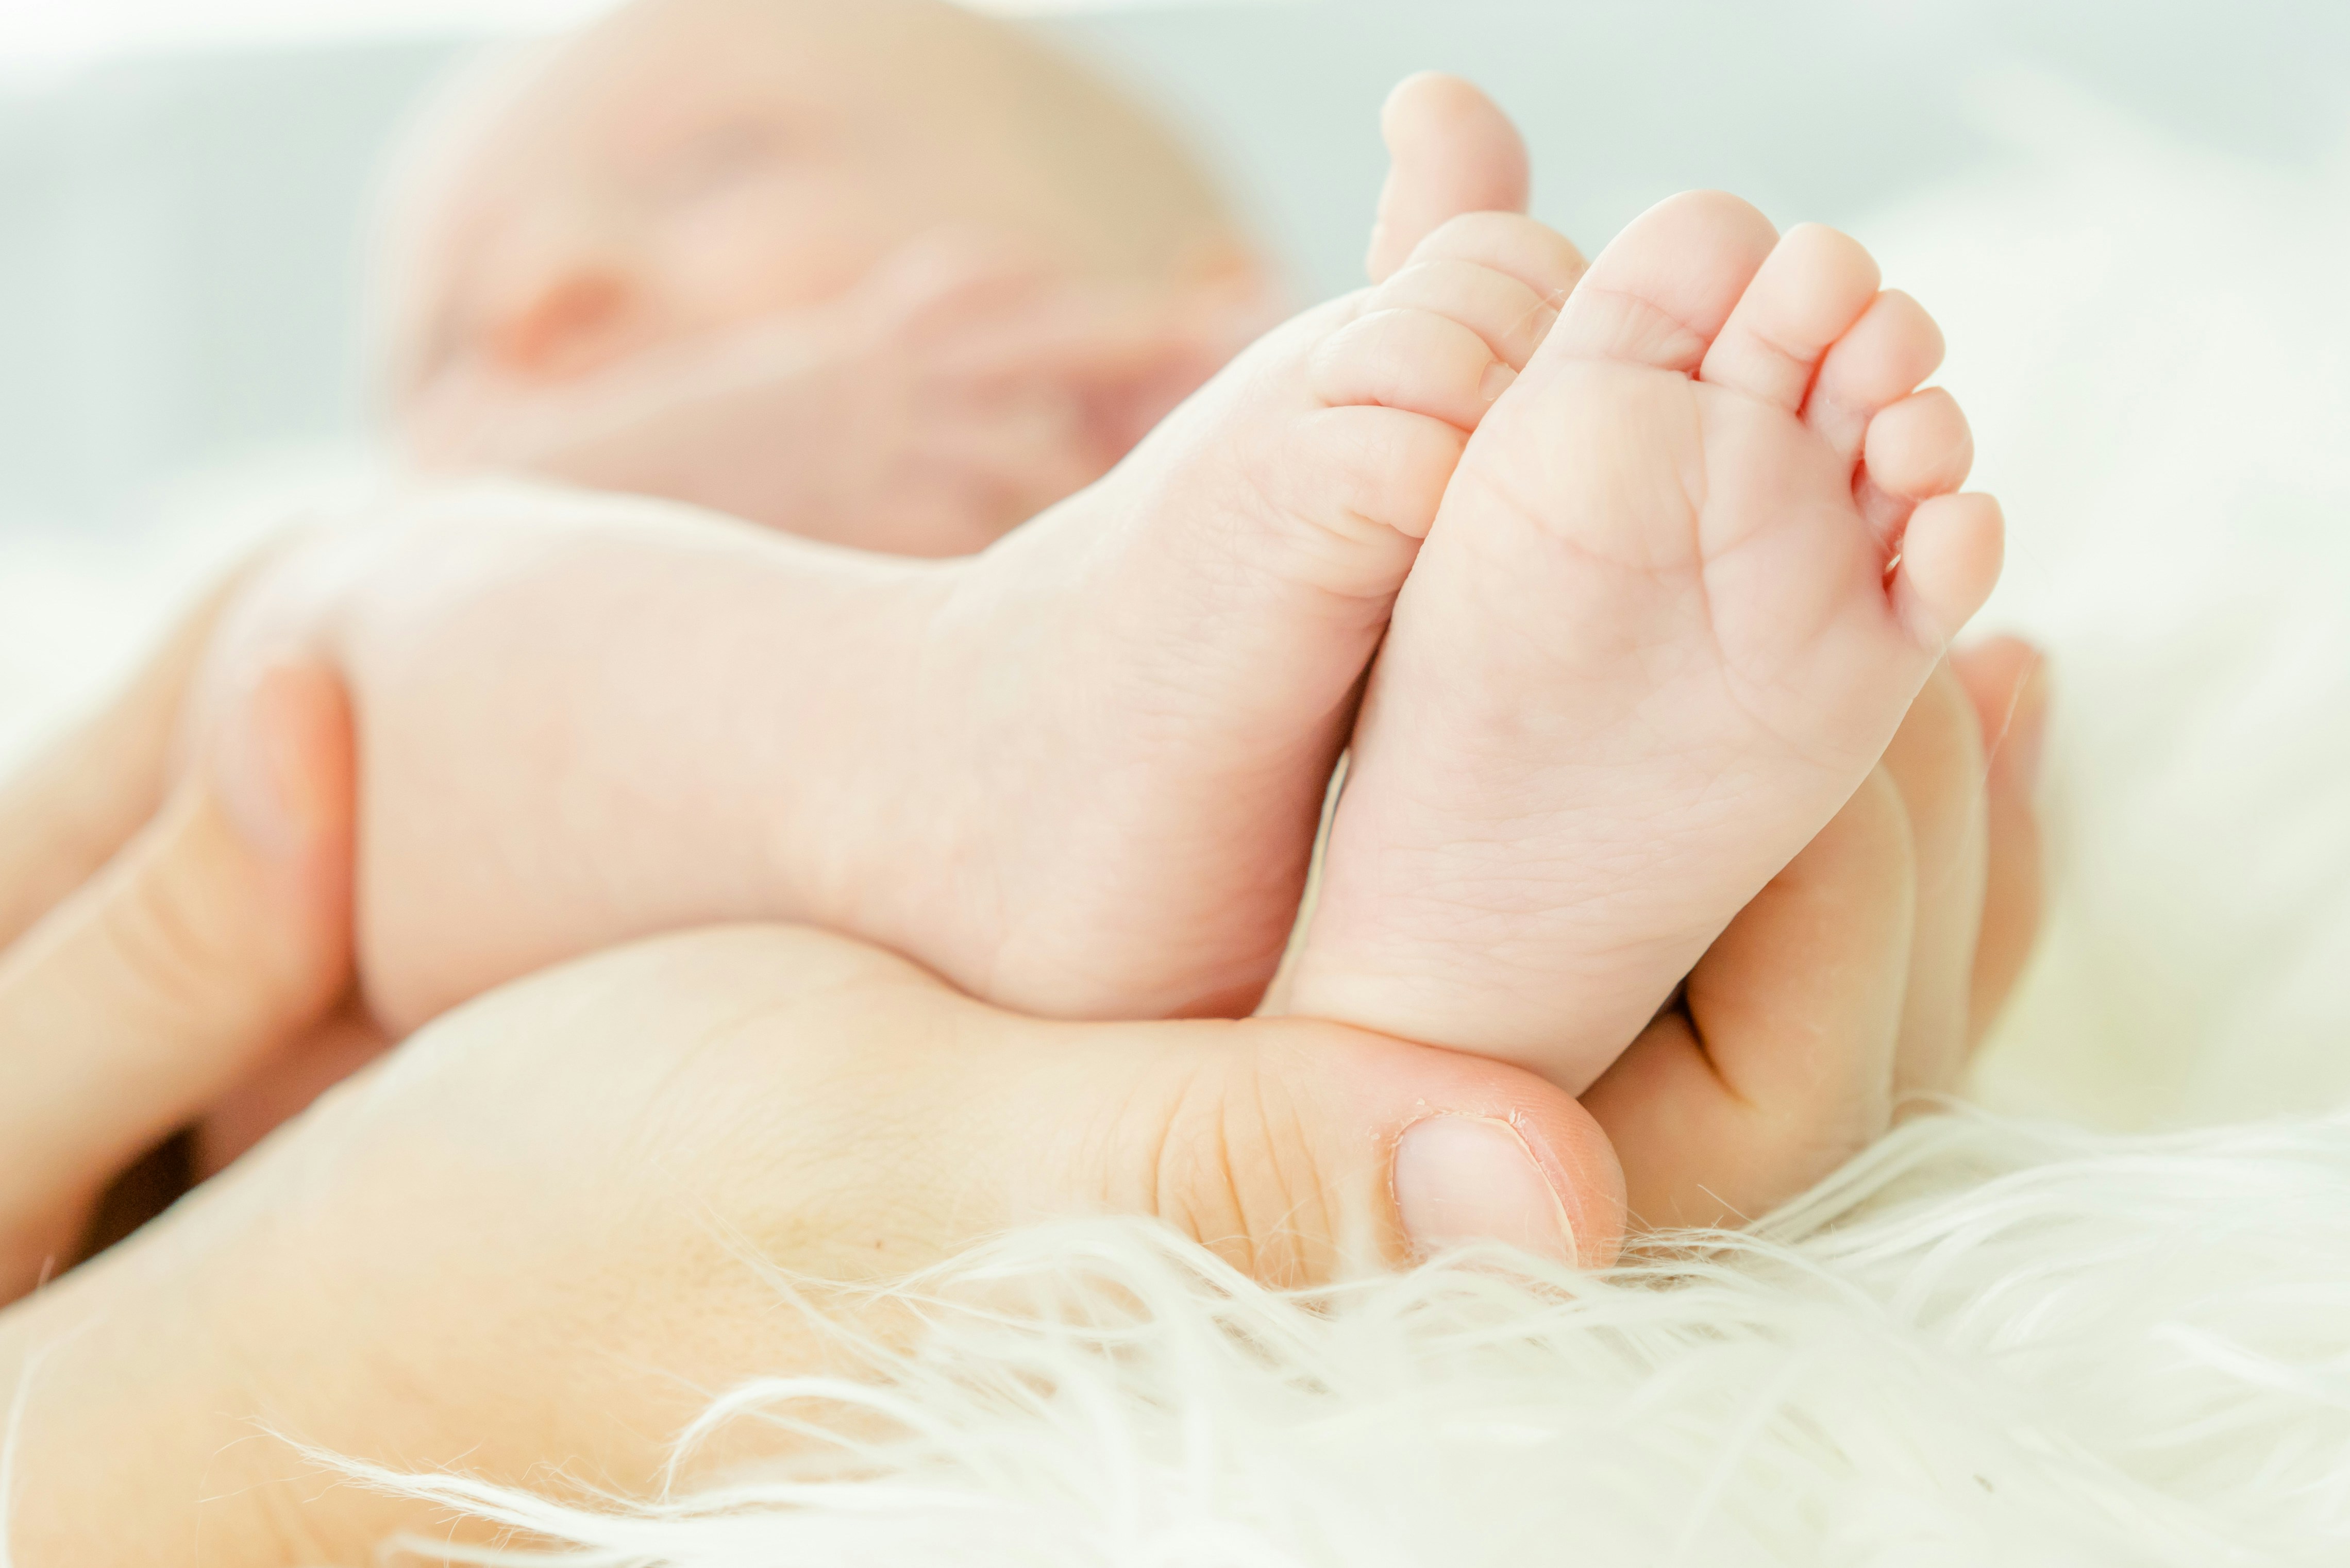 How Quickly Do Babies' Feet Grow?